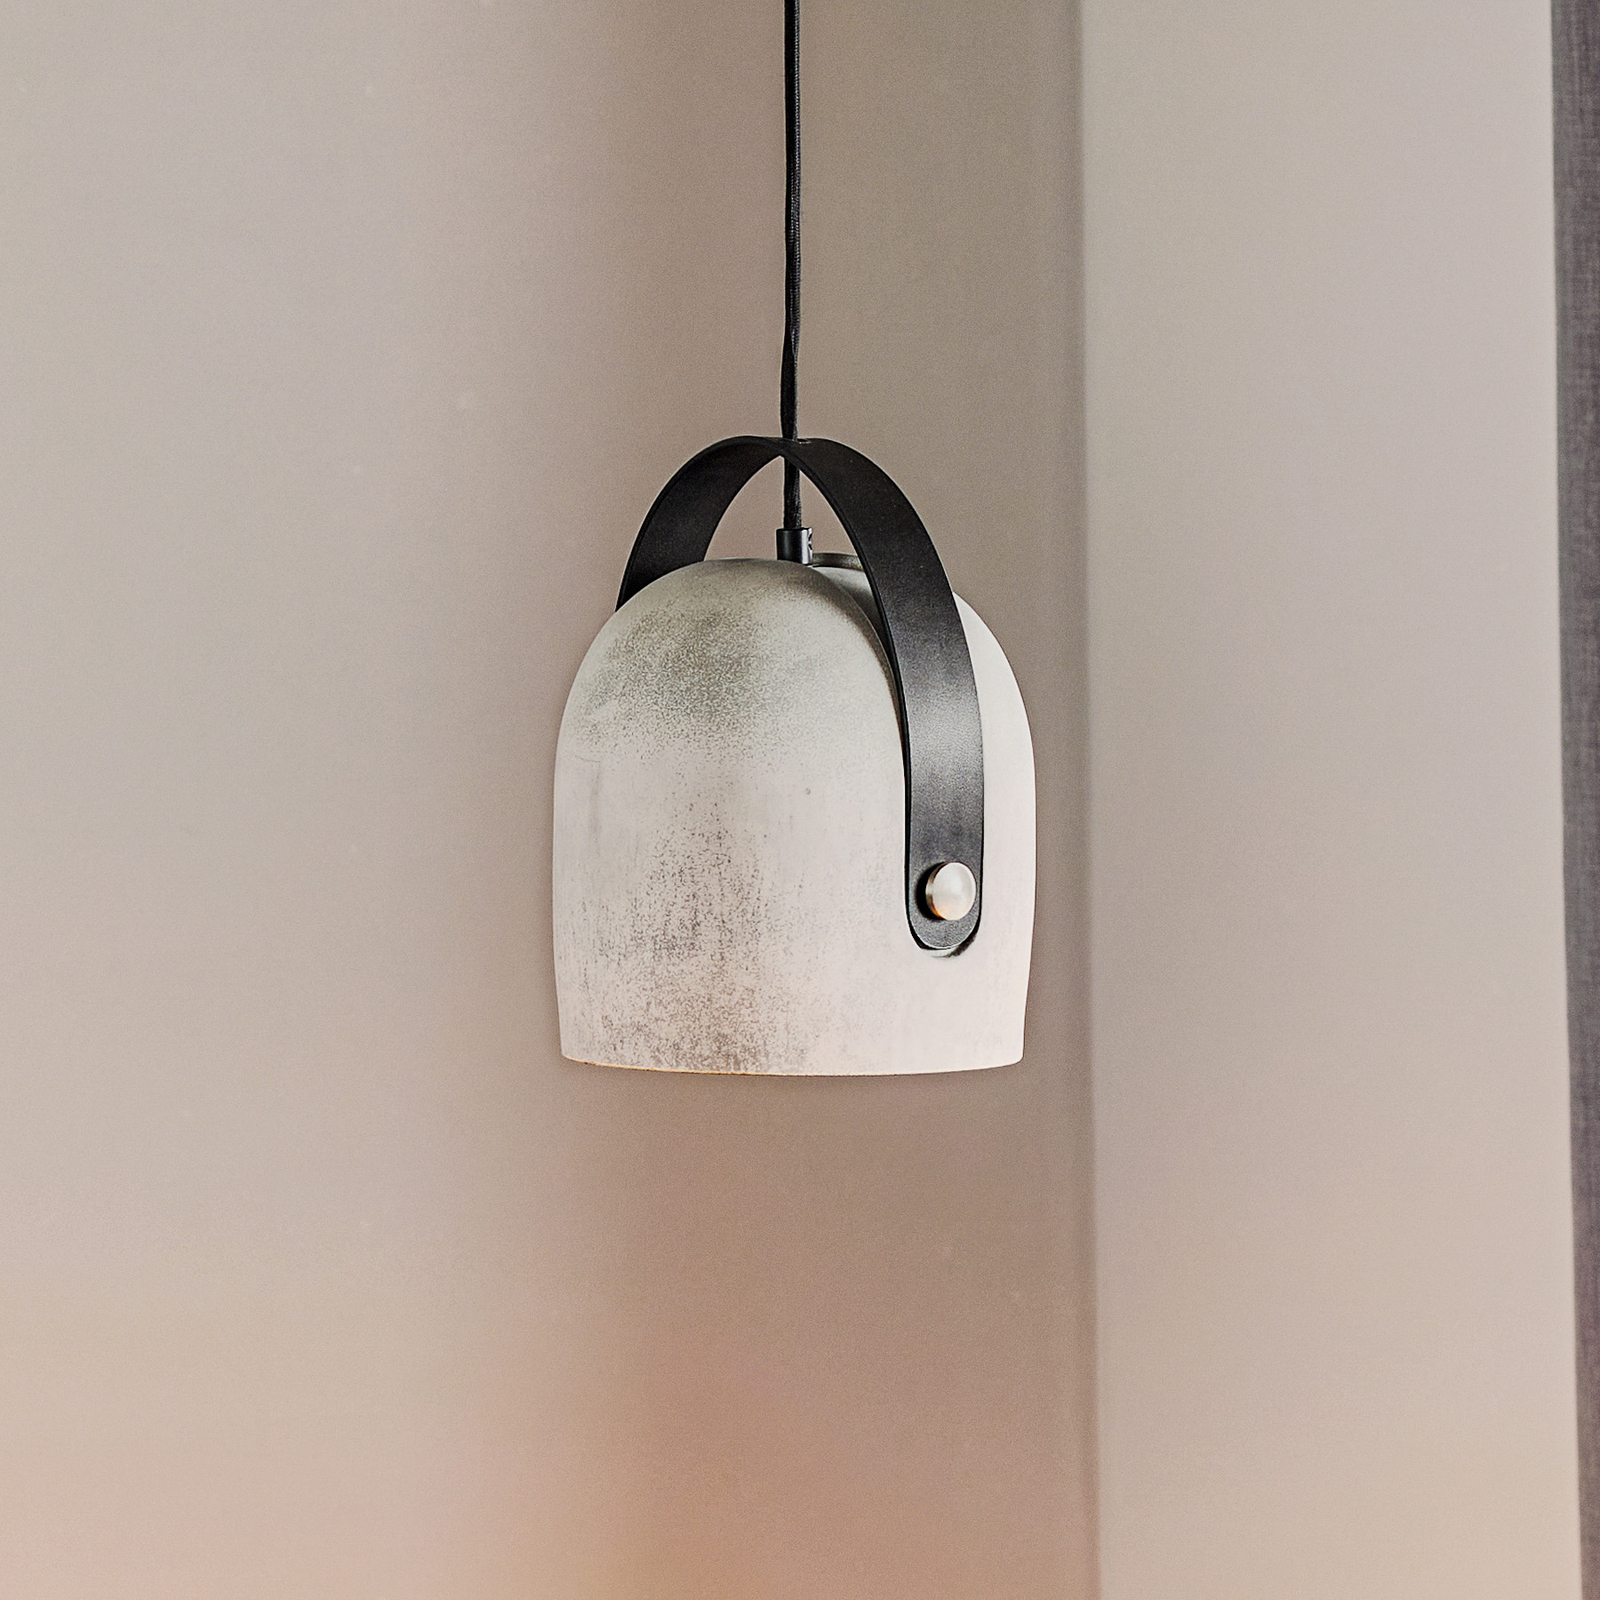 Trendy beton hanglamp Copain